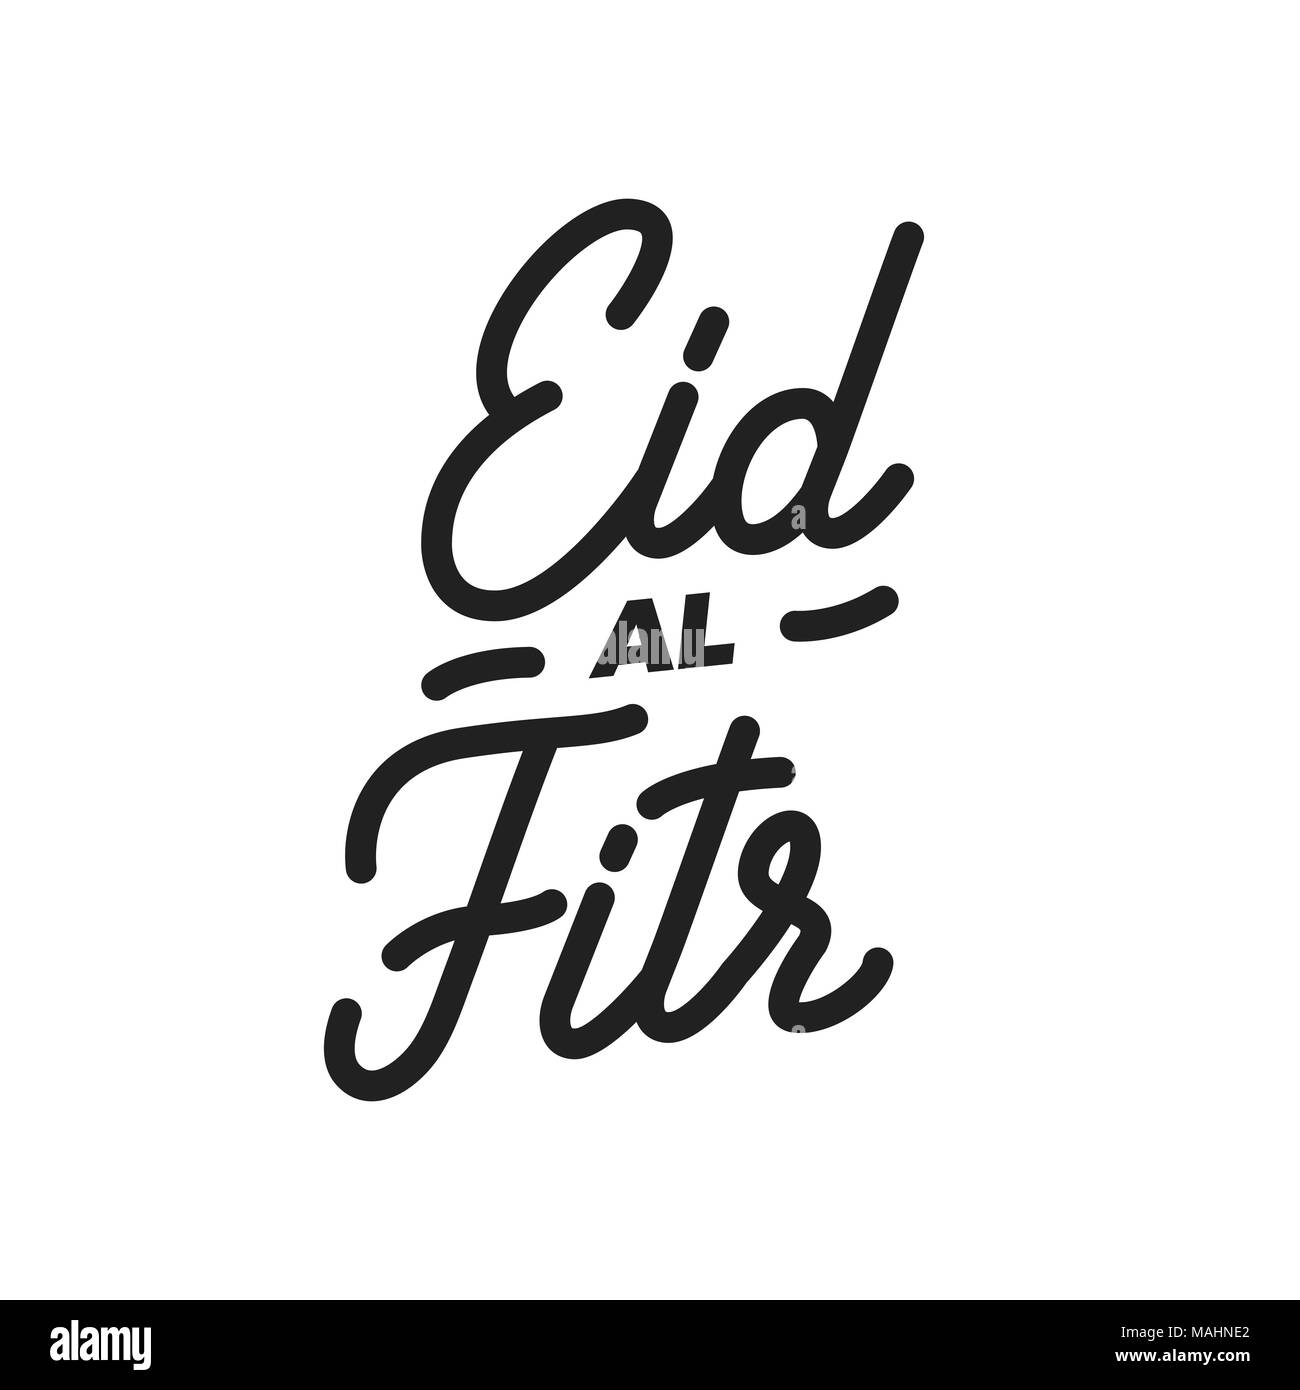 Eid alFitr. Muslim holiday lettering design for the end of Ramadan